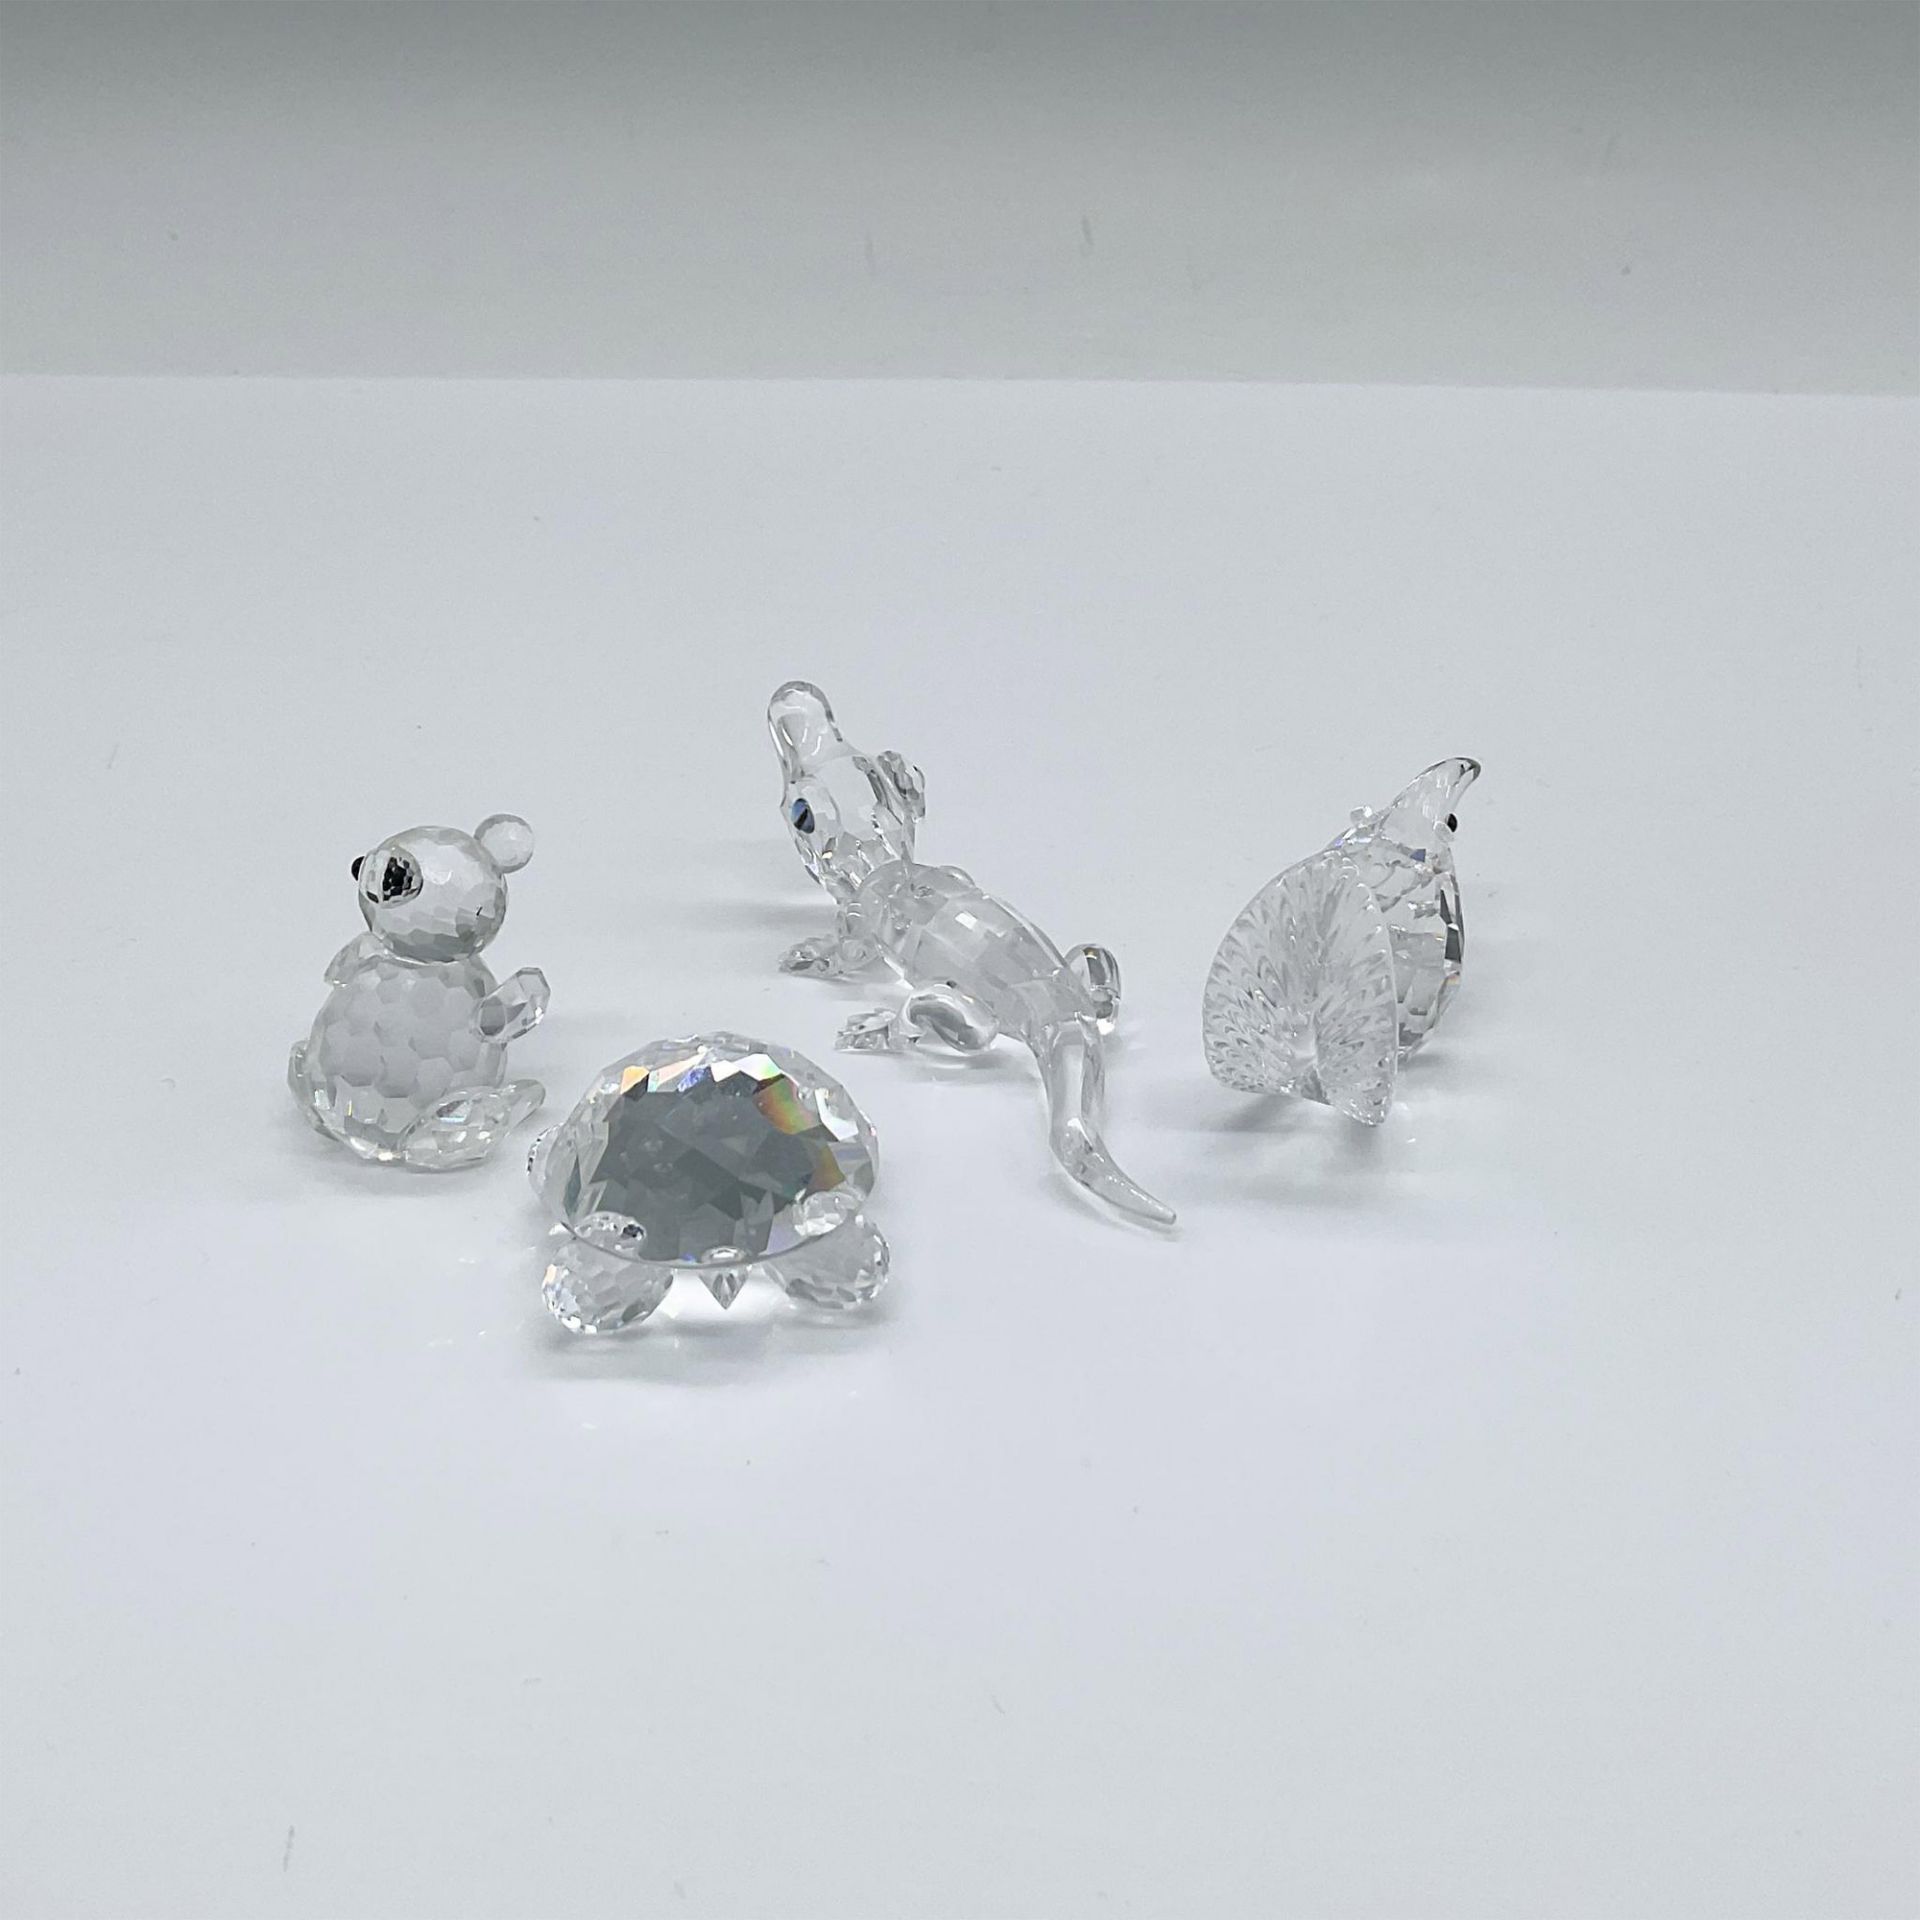 4pc Swarovski Crystal Endangered Species Figurines - Image 2 of 3